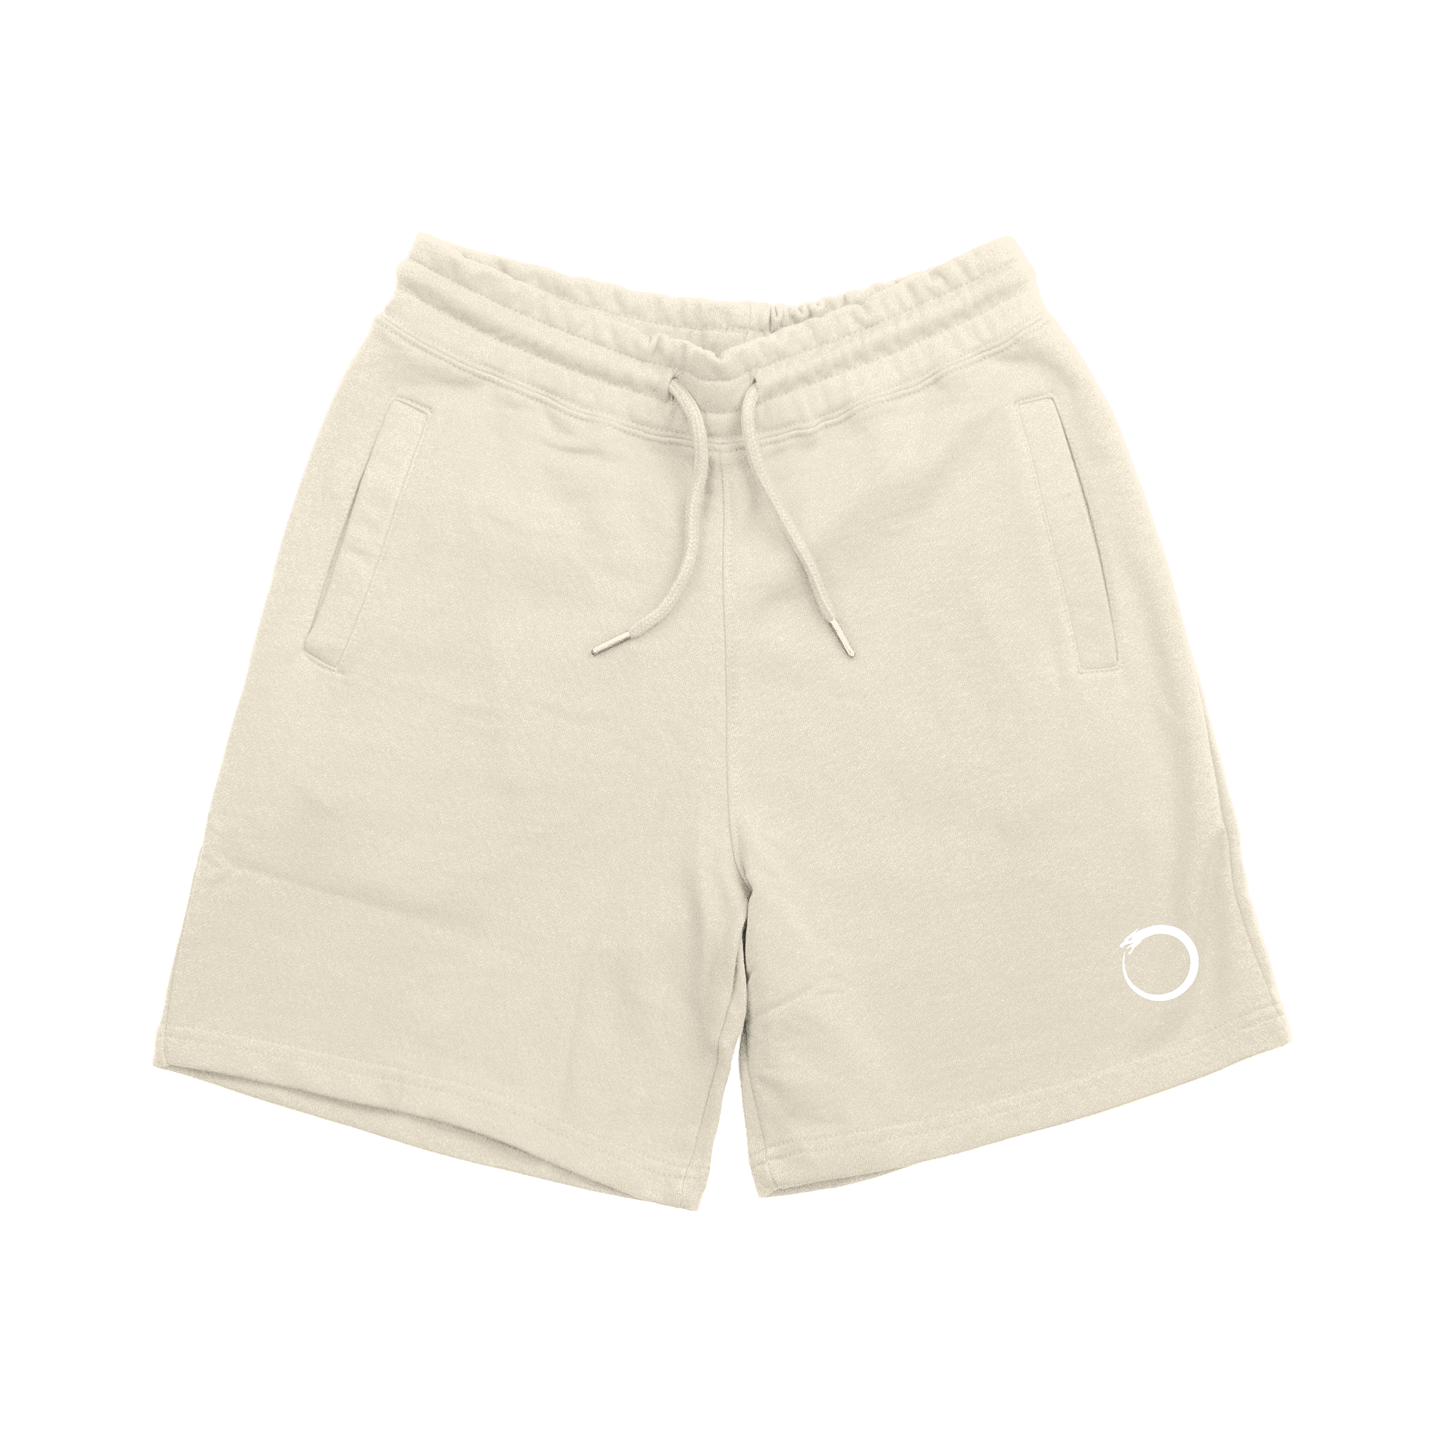 Classic Orochi Shorts - Bone